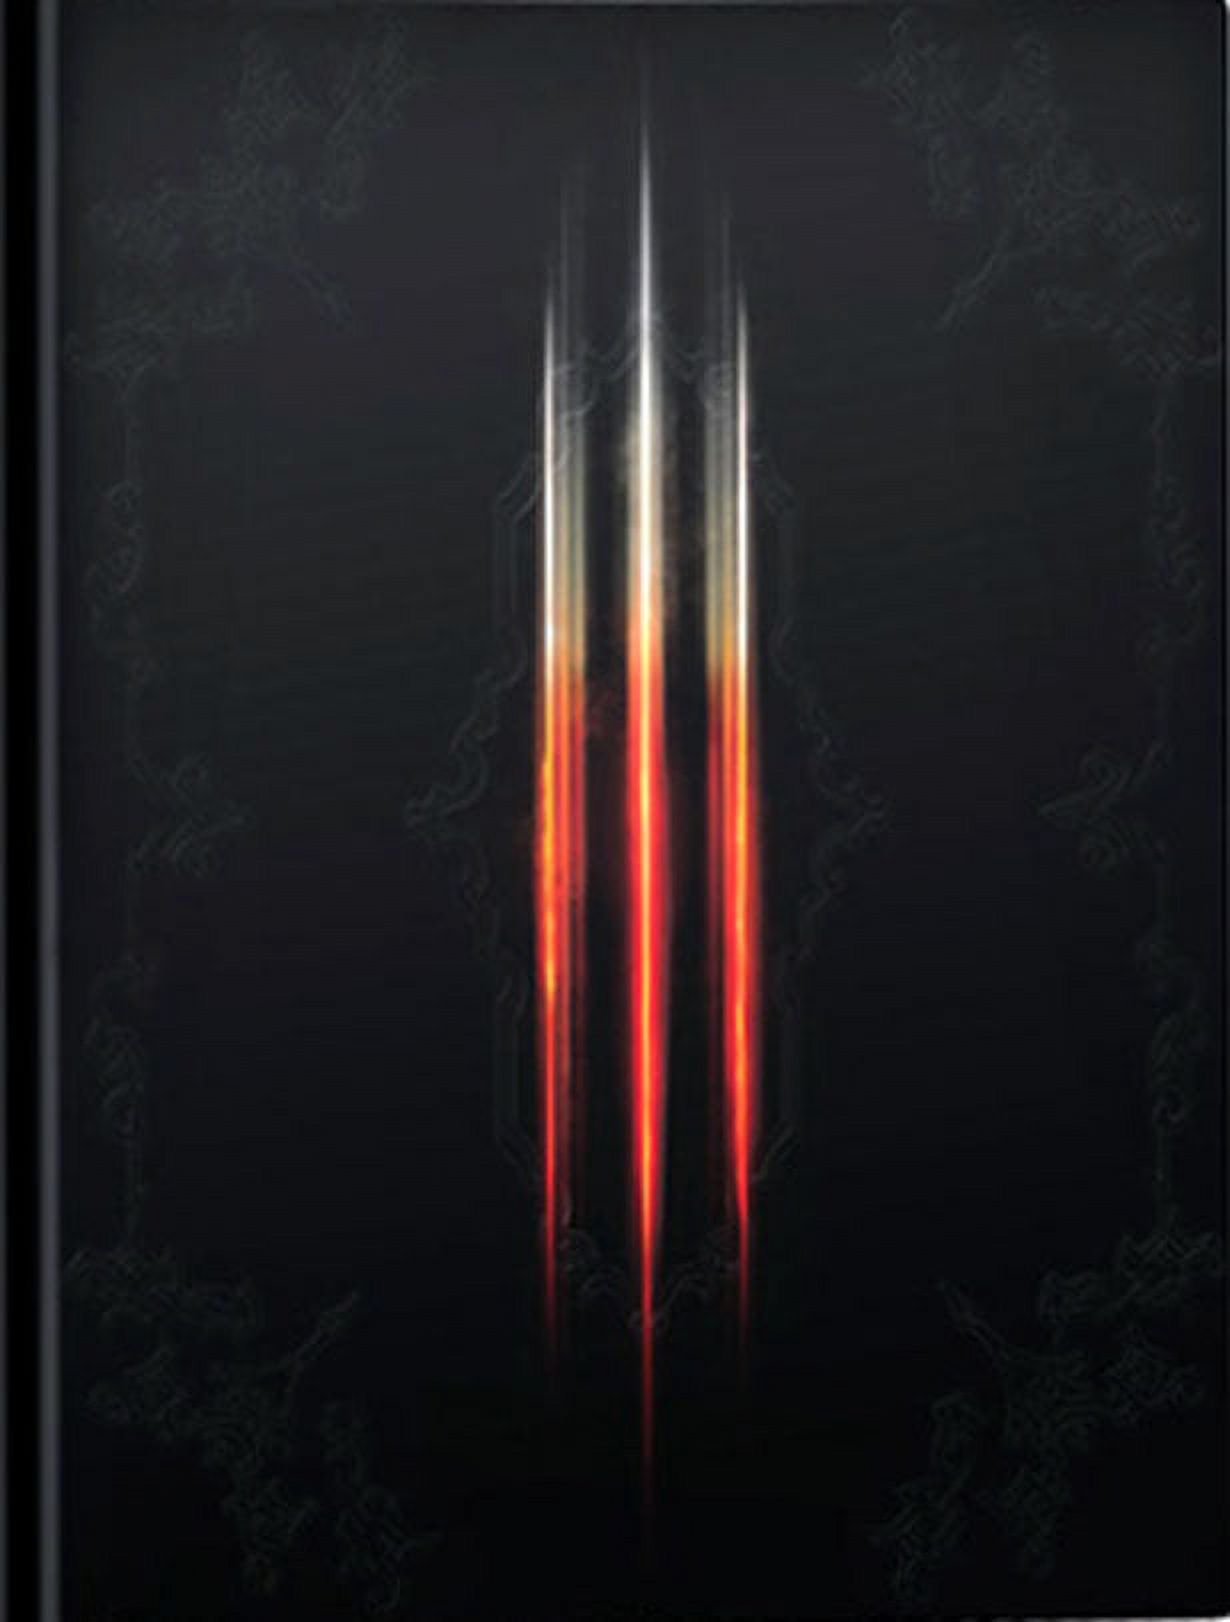 Prima Diablo 3 Limited Edition Strategy Guide Complete Quest Companion - image 1 of 5